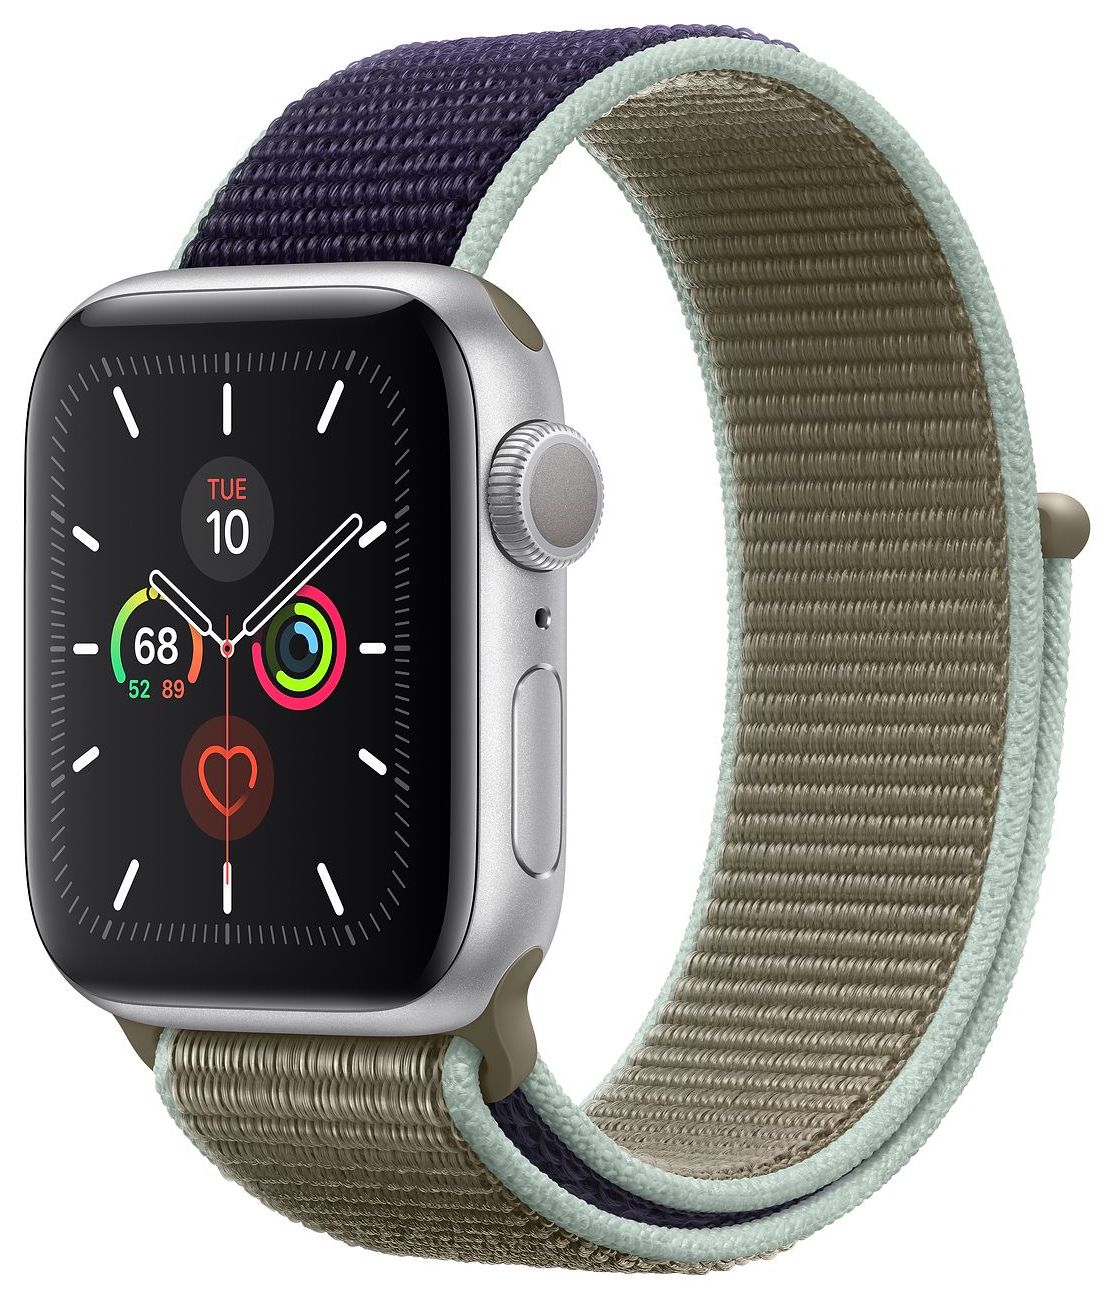 Aluminum Apple Watch